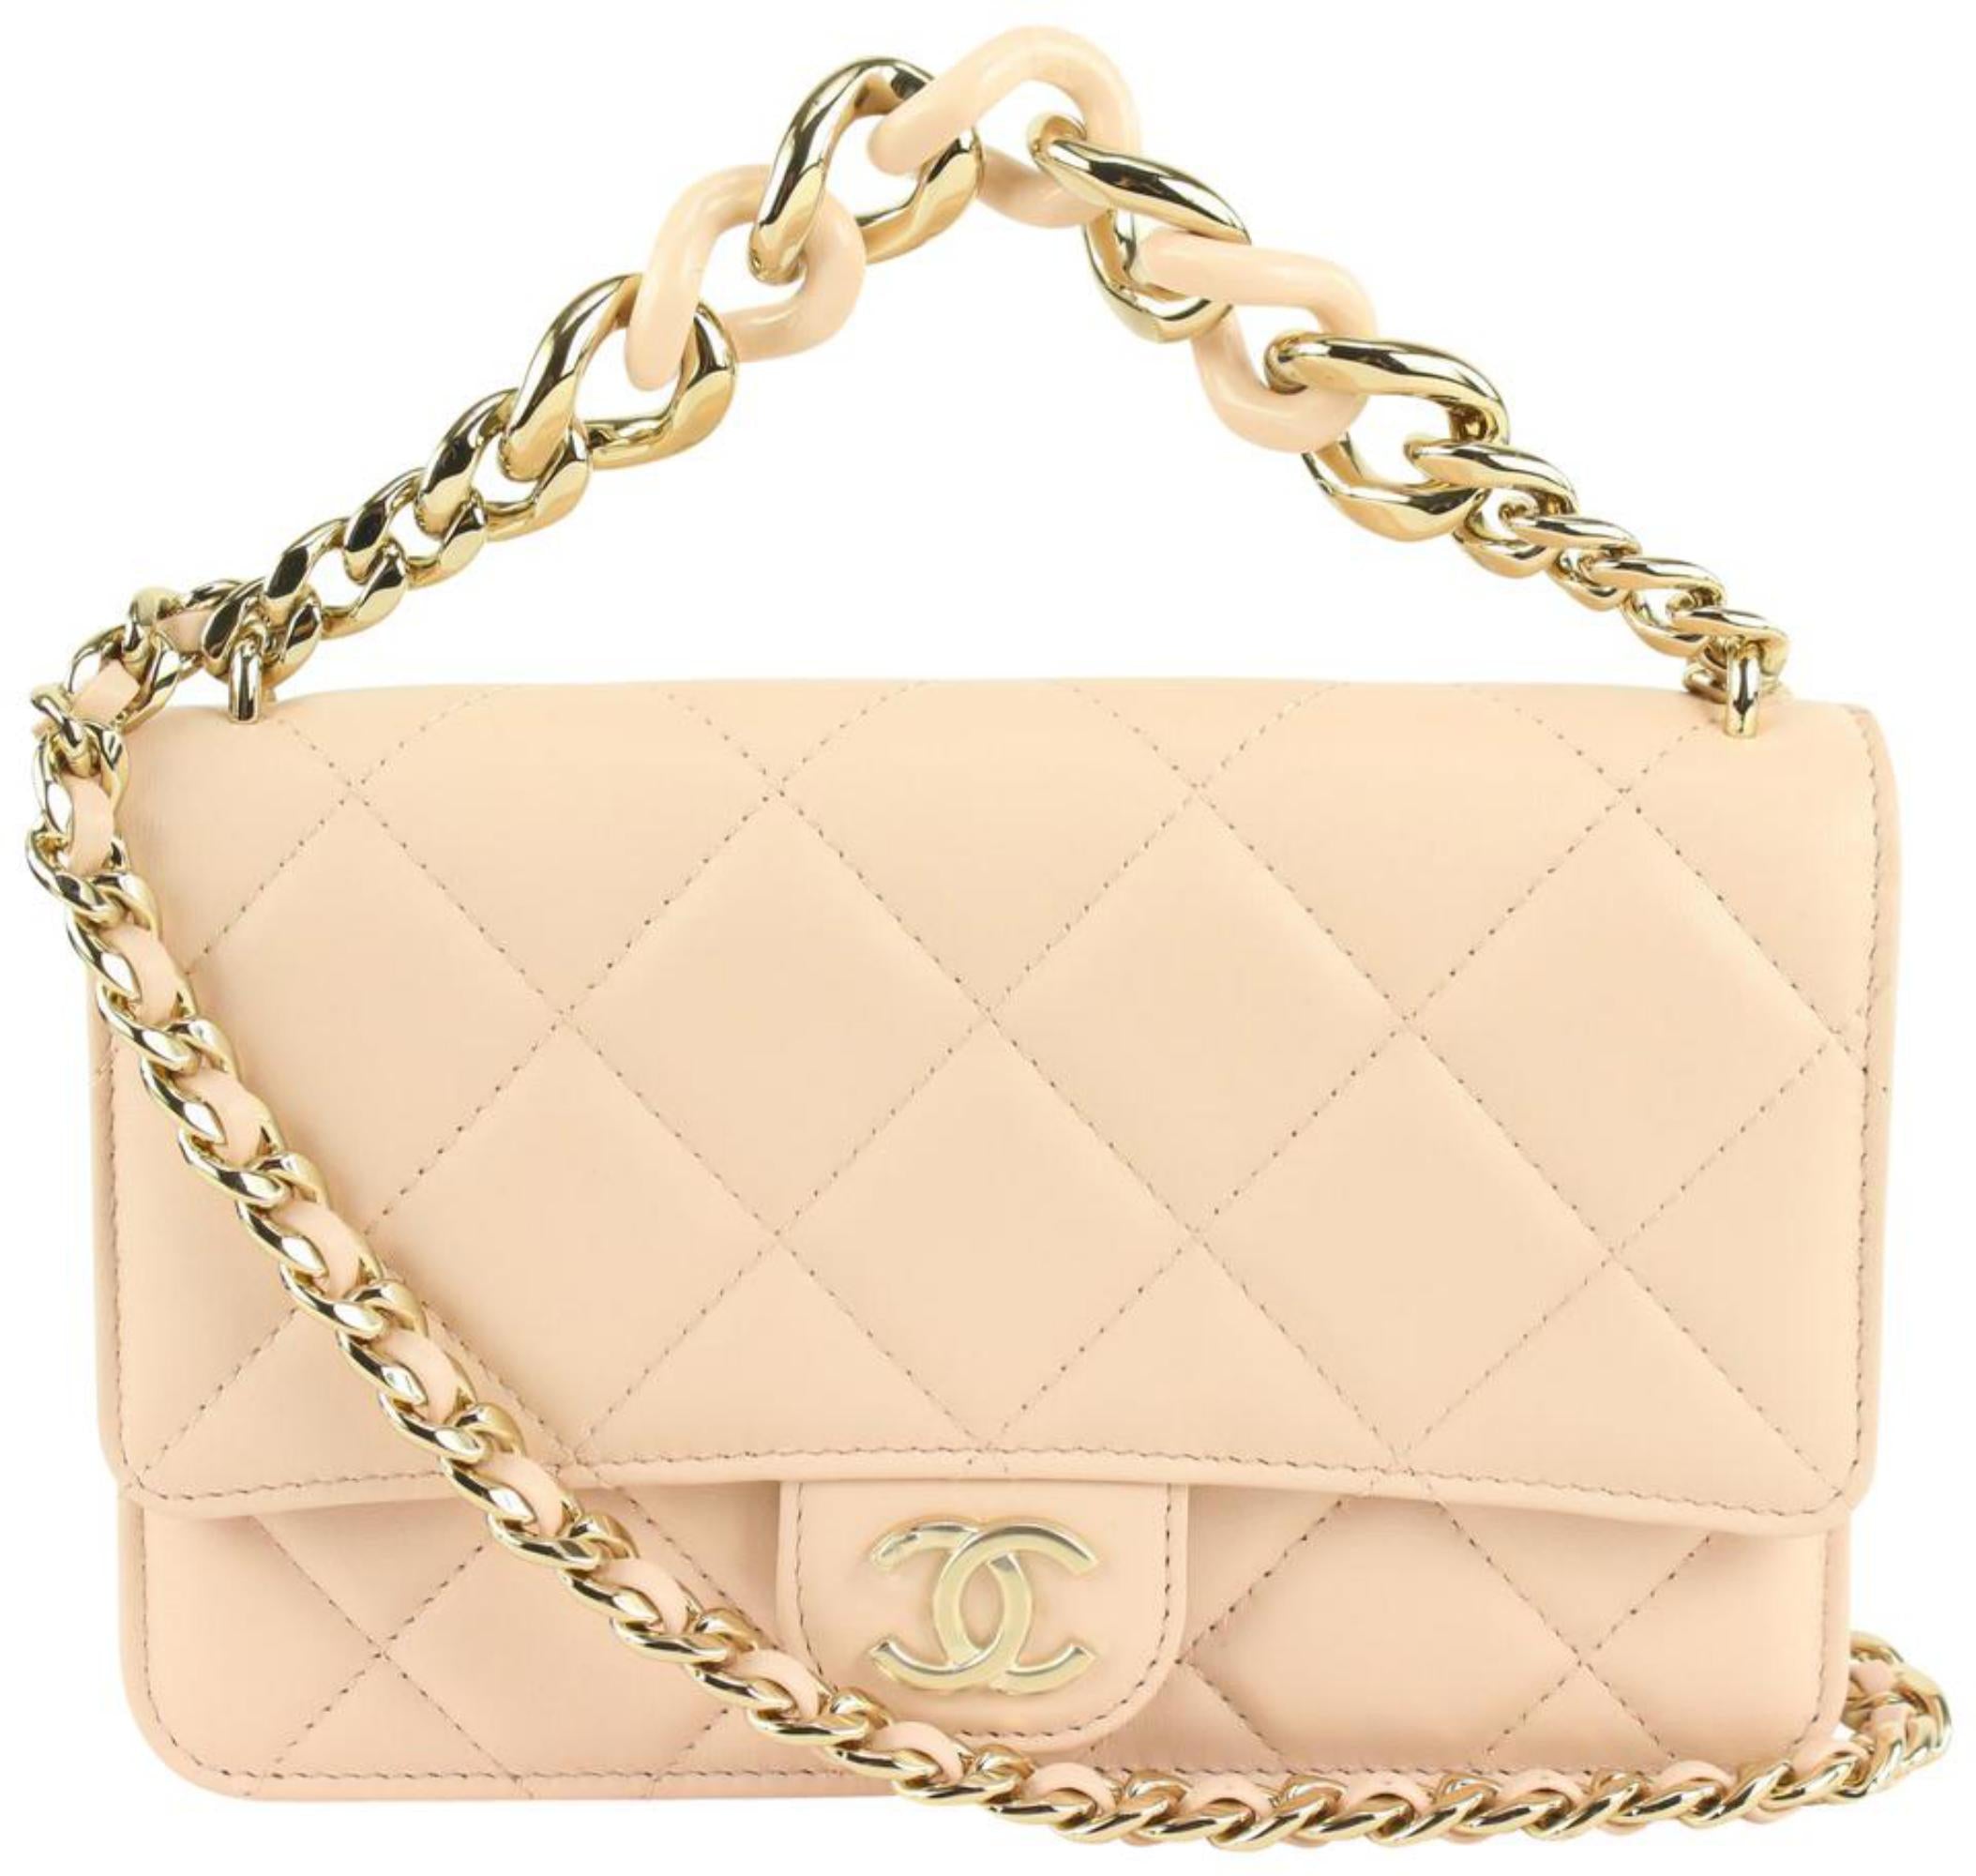 Chanel Beige Leather CC Mademoiselle Mini Flap Charm Key Ring